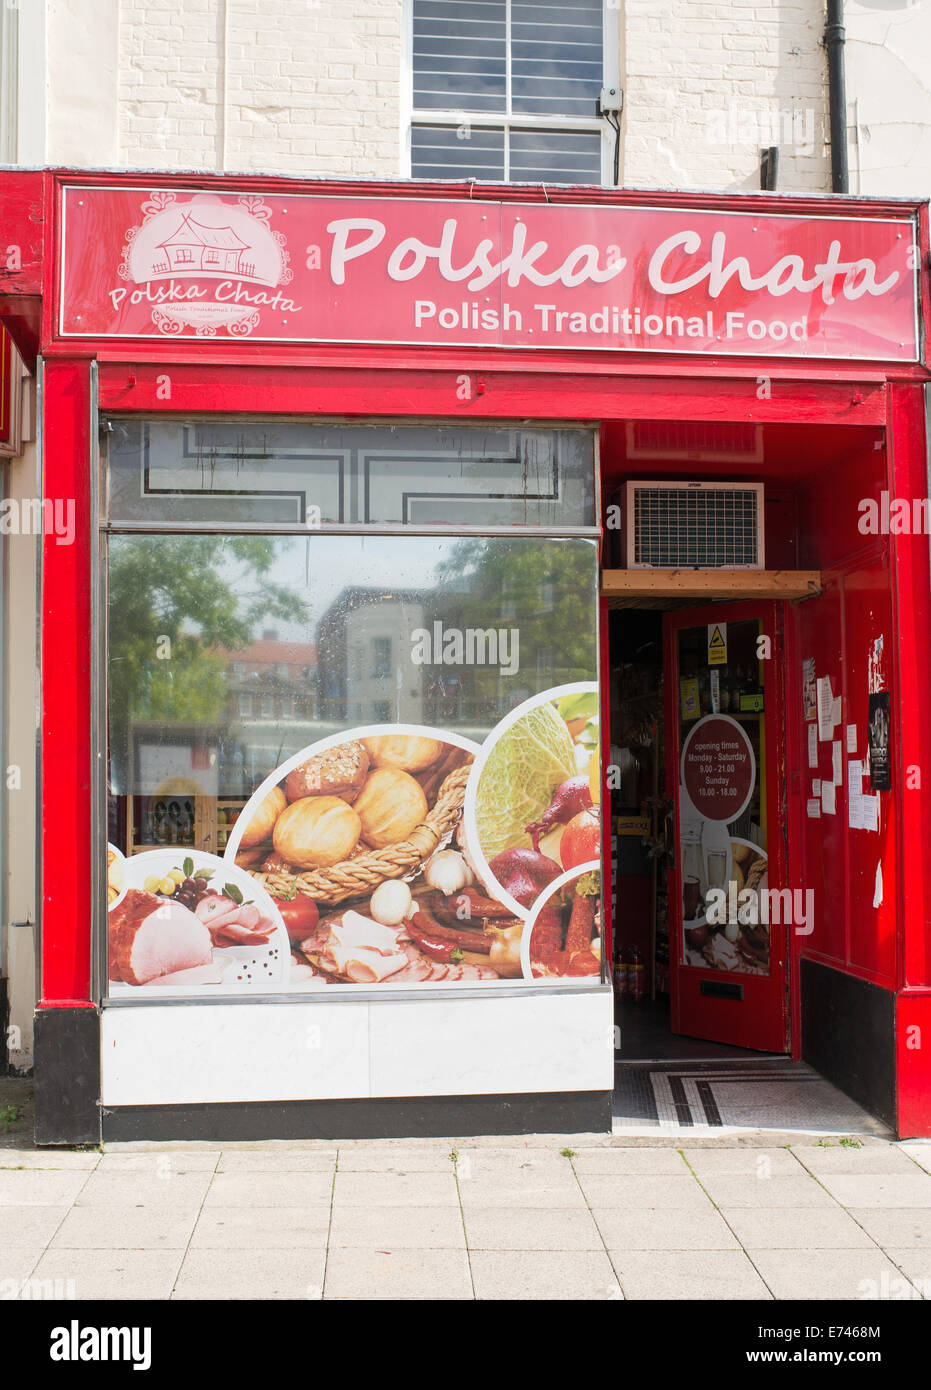 Polish food shop, Polska Chata, in Wisbech, Cambridgeshire, England, UK Stock Photo